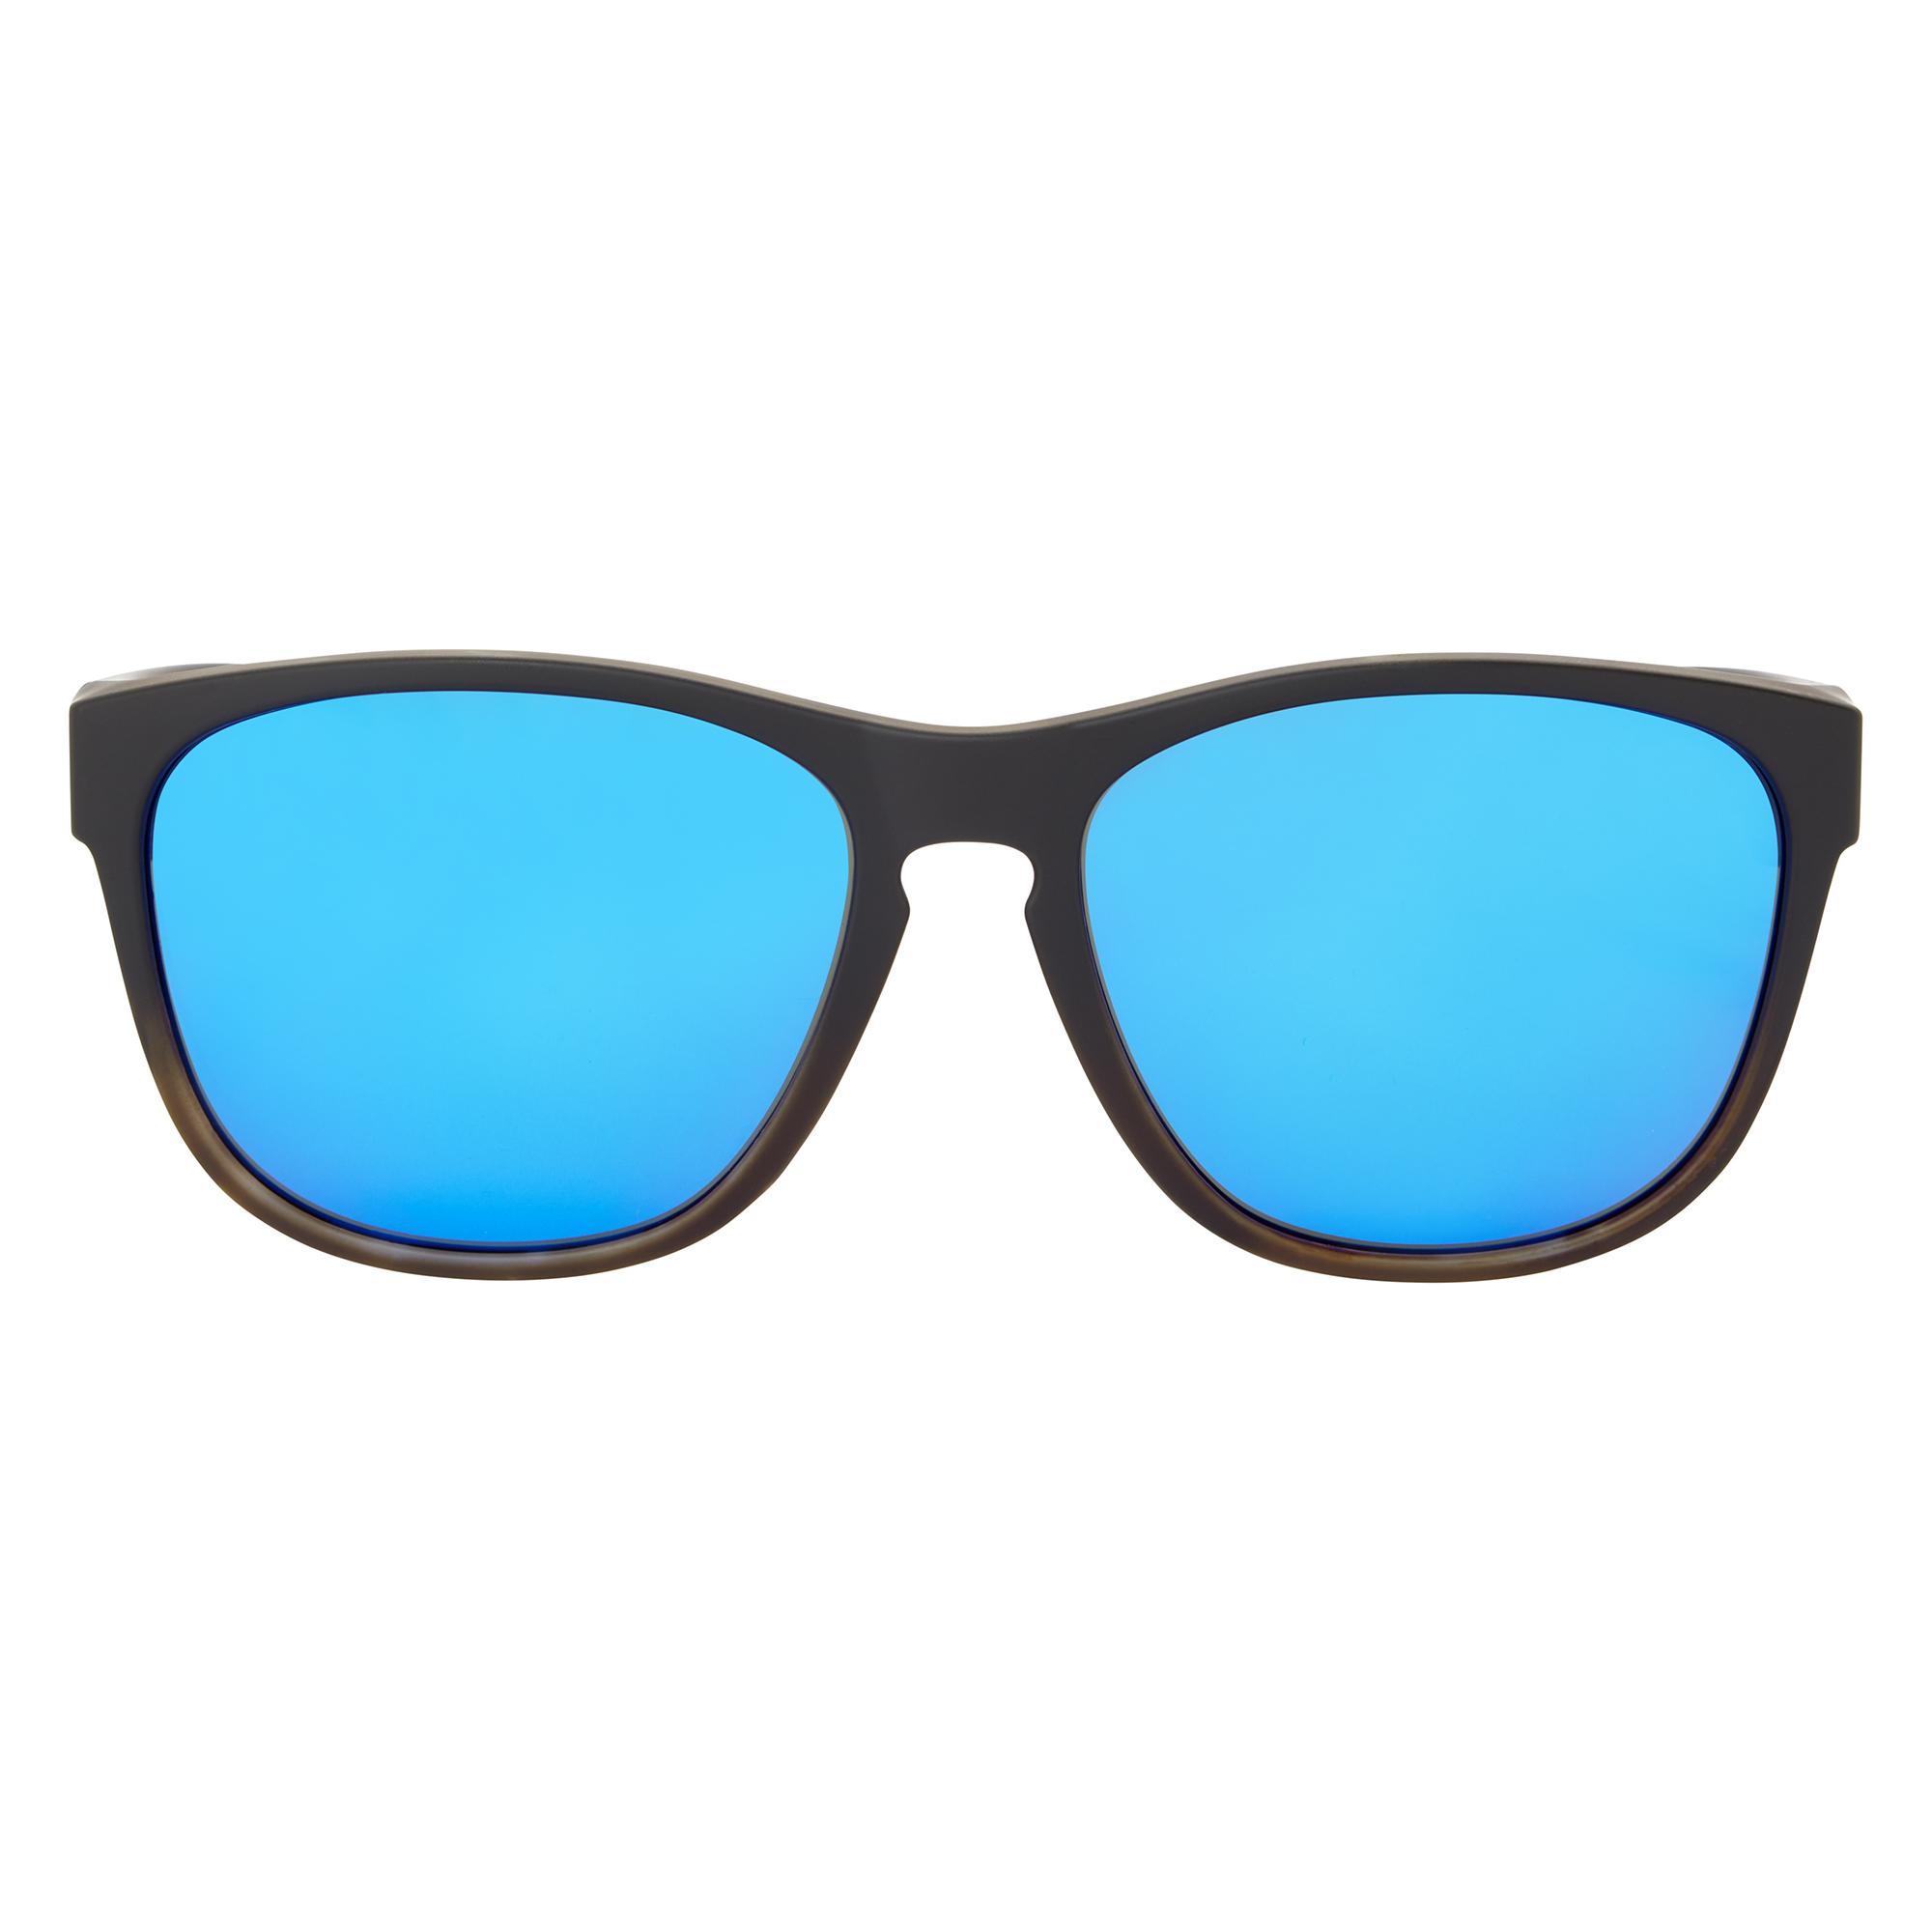 Dhb Umbra Sunglasses - Black/blue